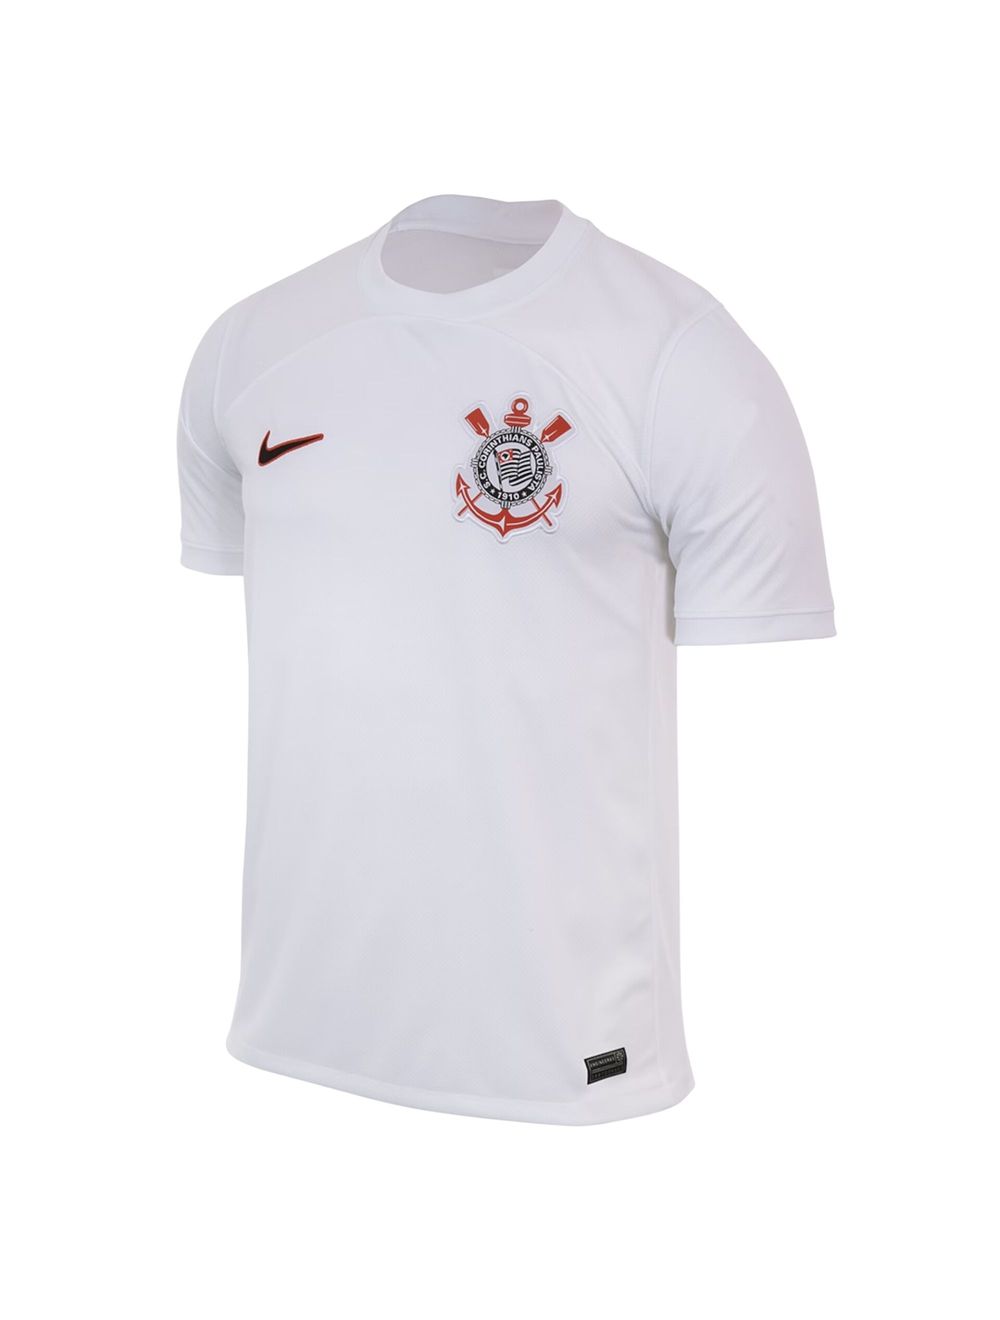 Camisa Brasil CBF I 20/21 Nike Torcedor Pro Masculina - Amarela